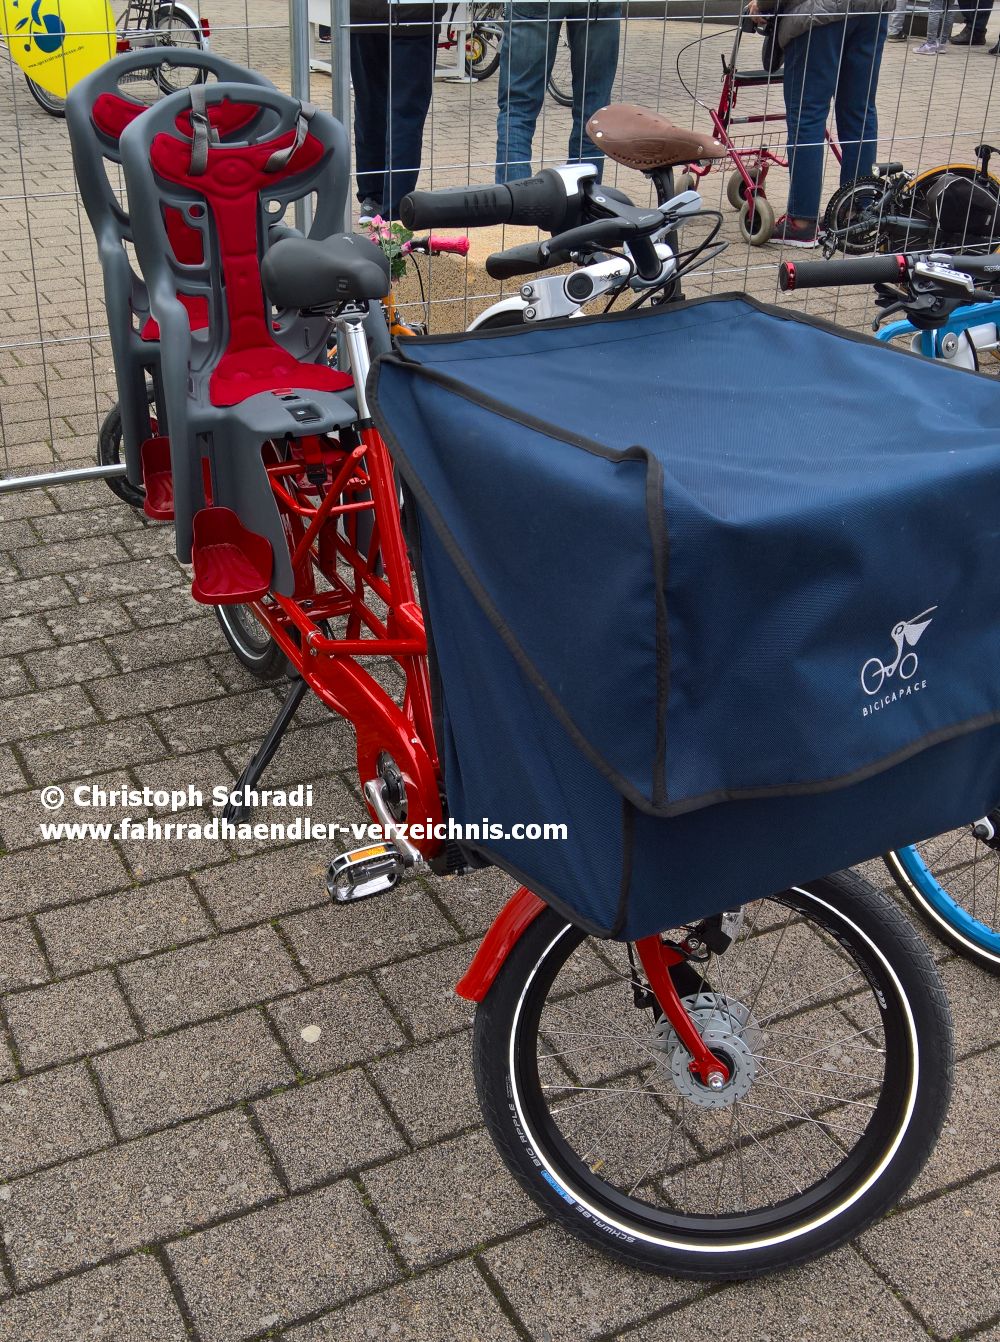 Spezialradmesse Germersheim 2016 Kindertransport im Kindersitz auf dem Fahrrad